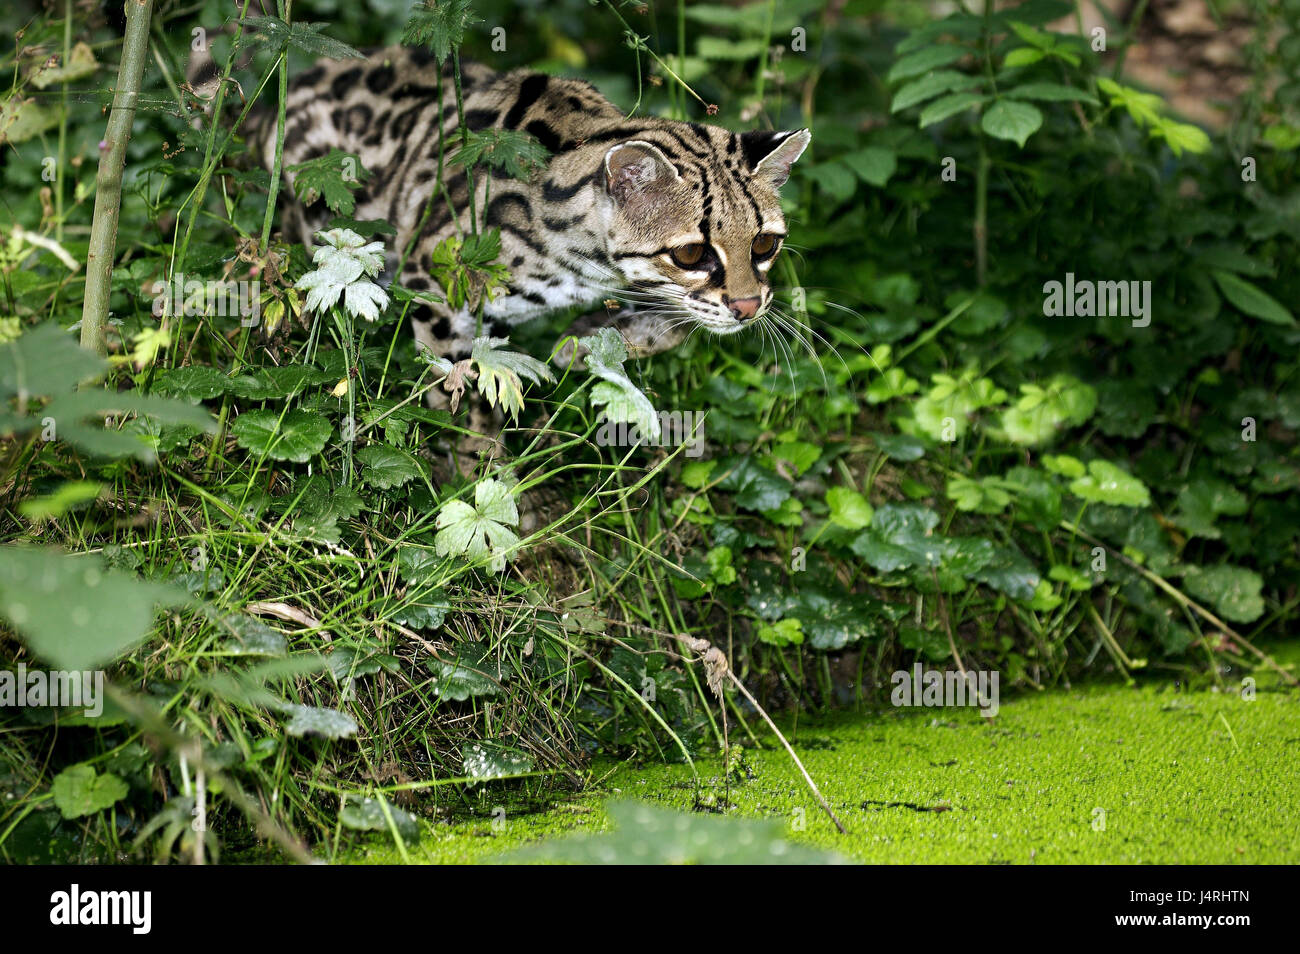 Larga cola gato gato margay, Leopardus wiedii, orificio de agua, Foto de stock